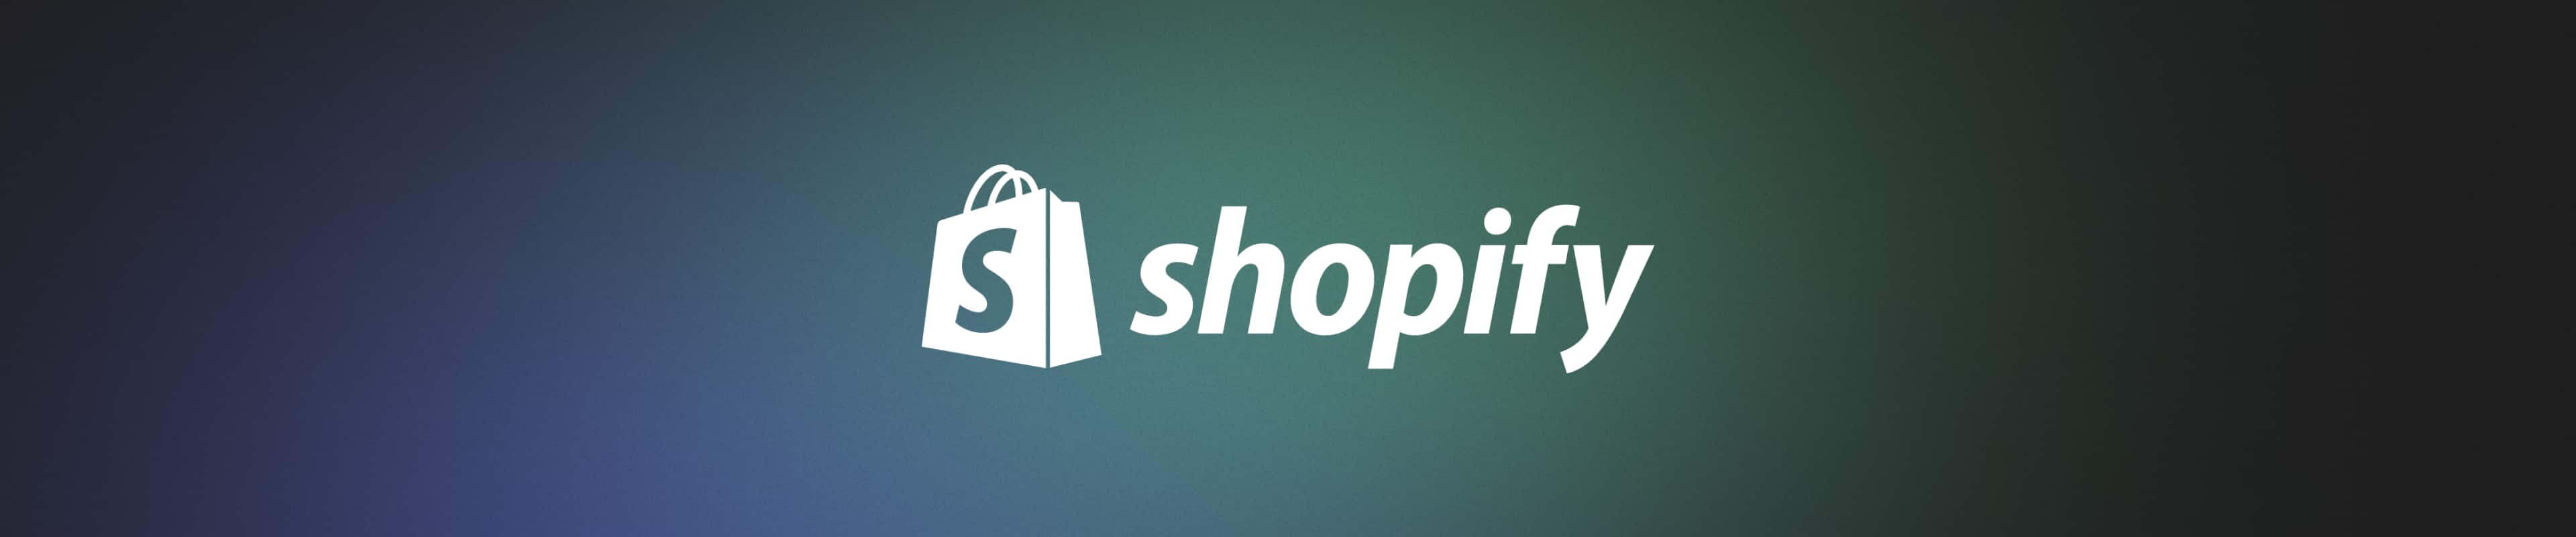 Shopify web development agency